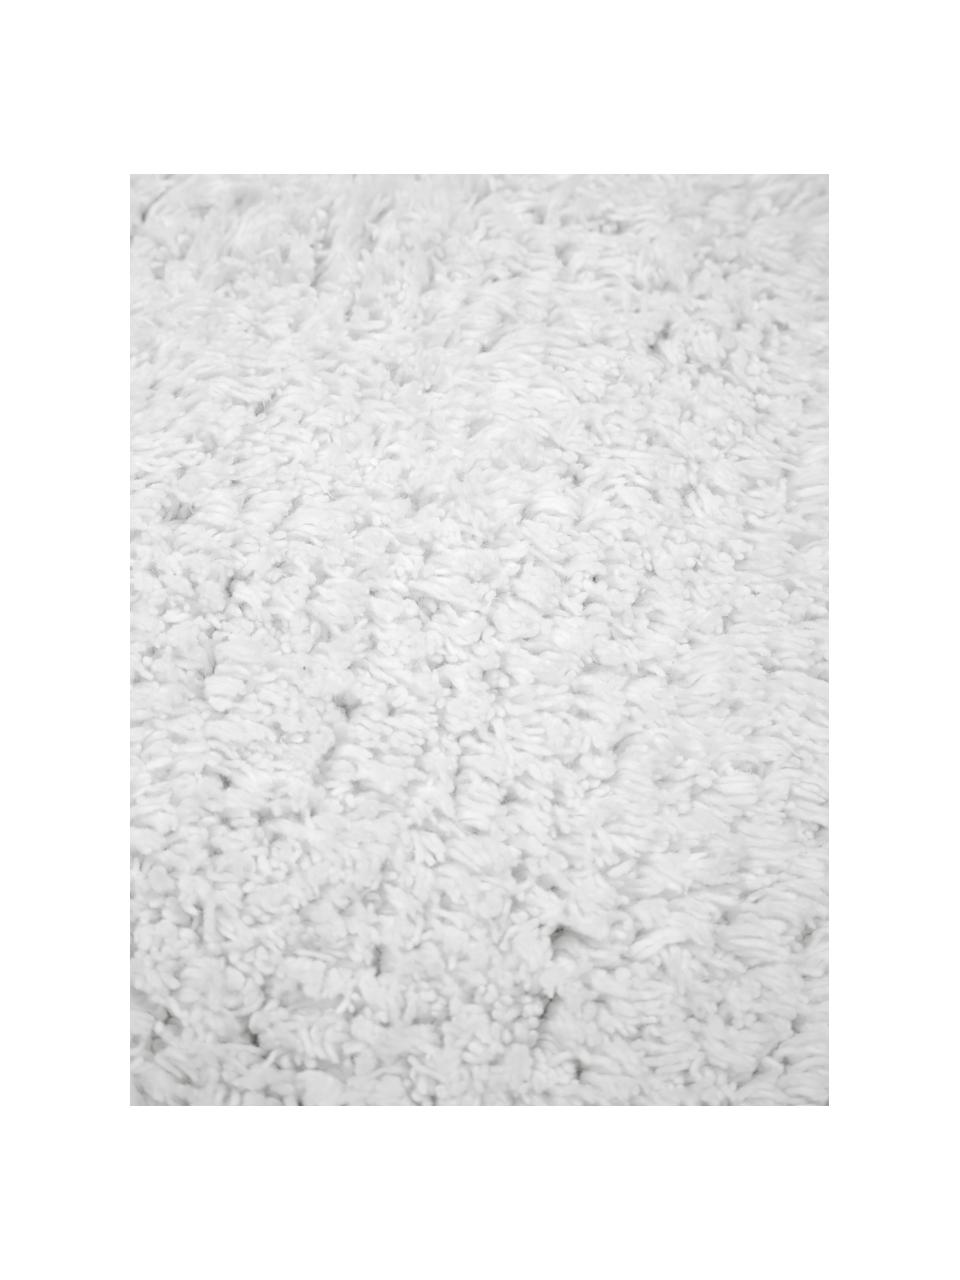 Tappetino da bagno Ingela, 100% cotone, Bianco, Ø 65 cm